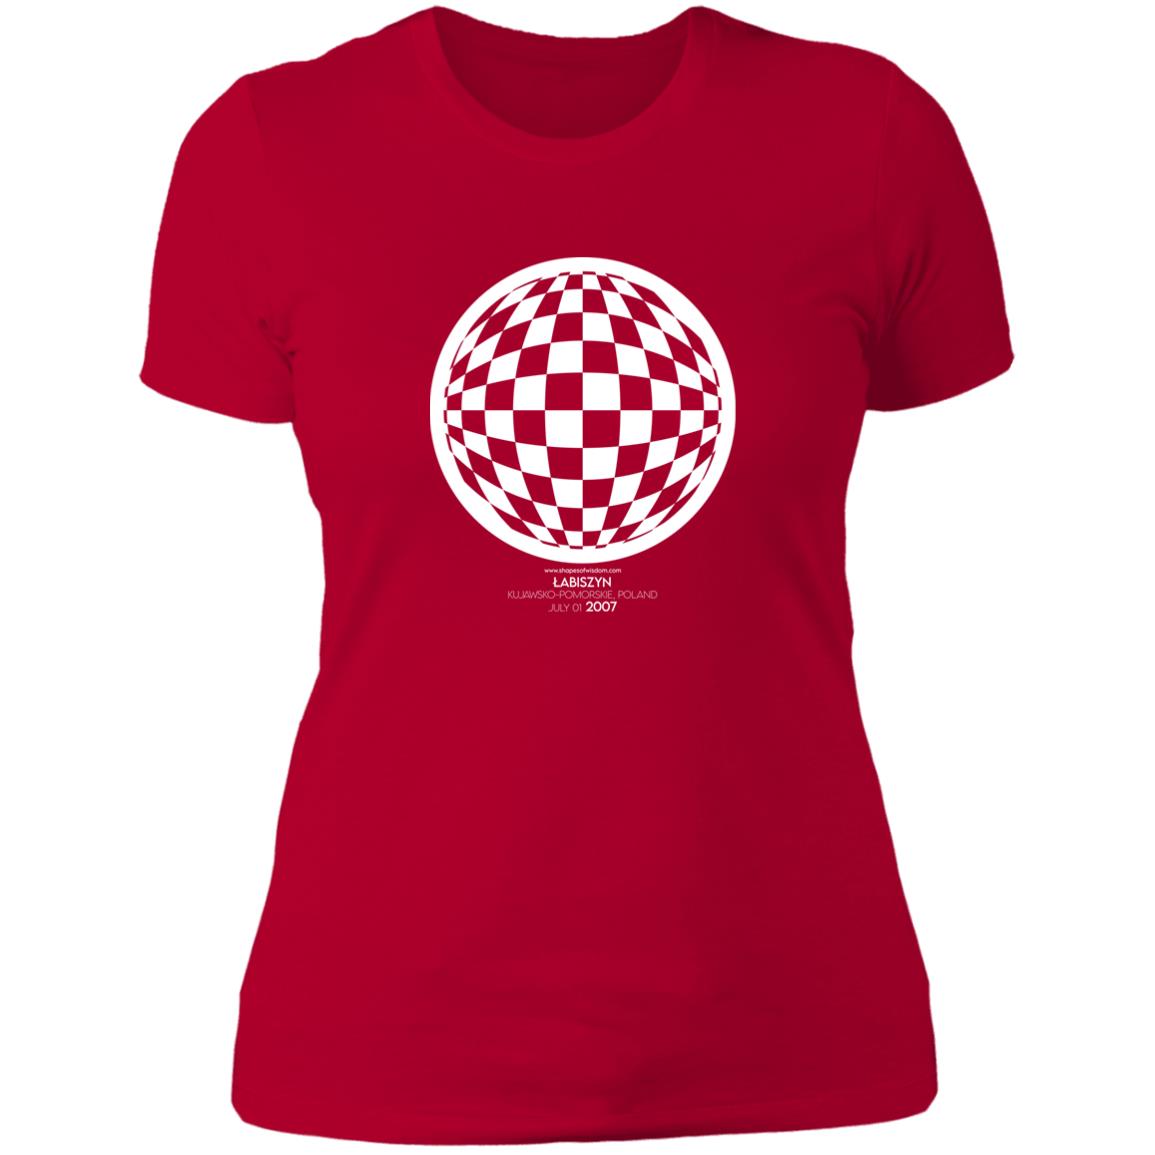 Crop Circle Basic T-Shirt - Łabiszyn